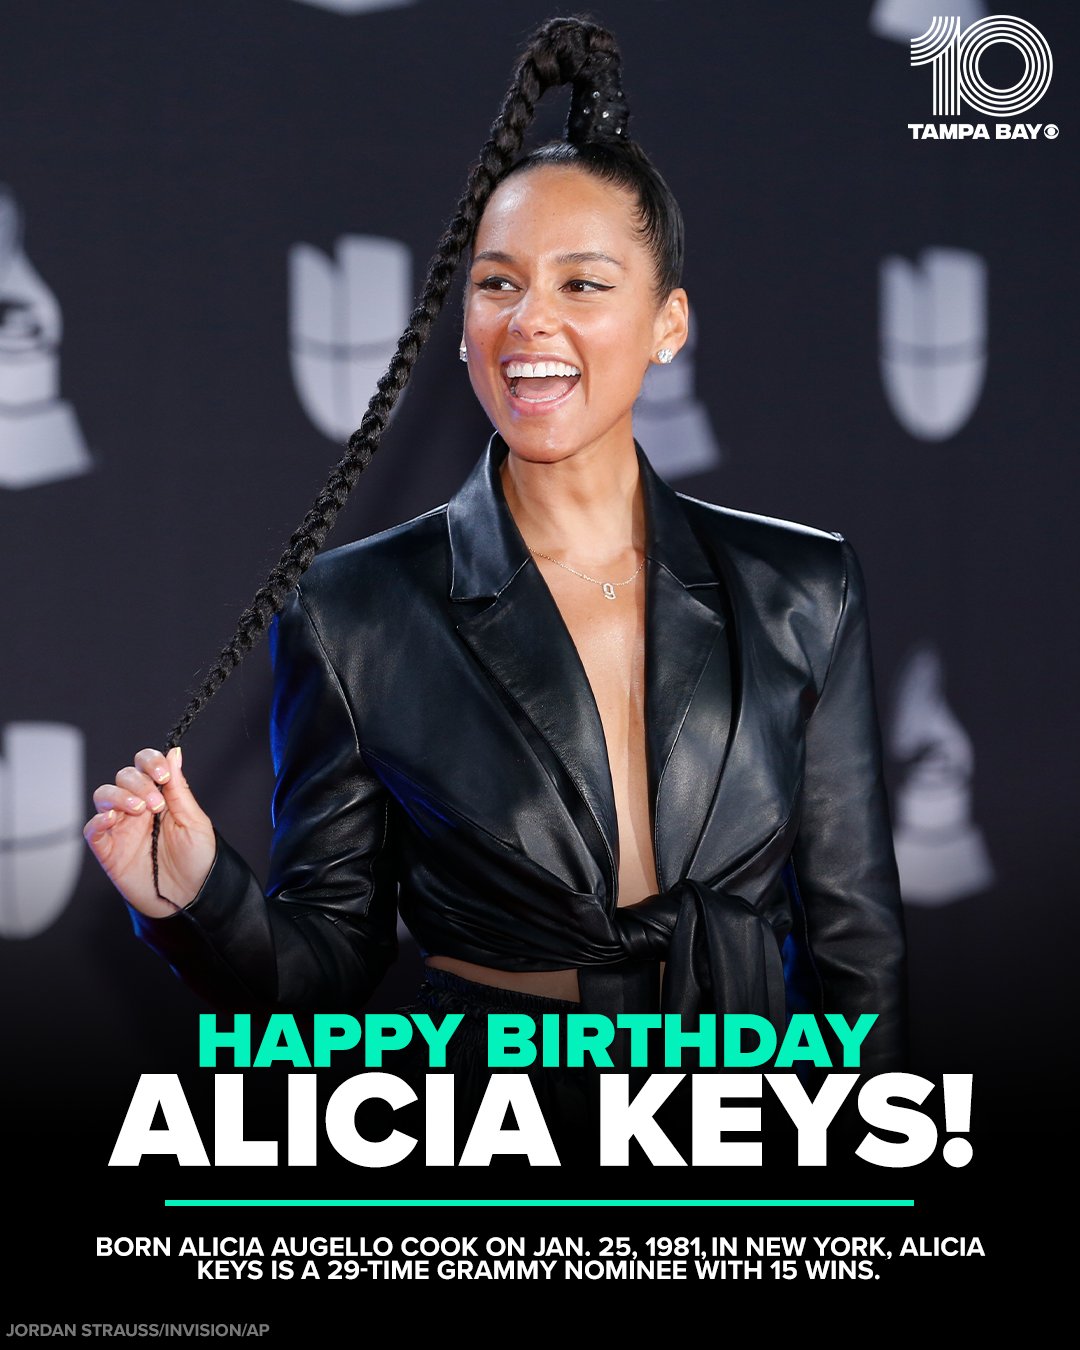 HAPPY BIRTHDAY! 15-time Grammy award-winning artist Alicia Keys celebrated her 41st birthday on Tuesday! 